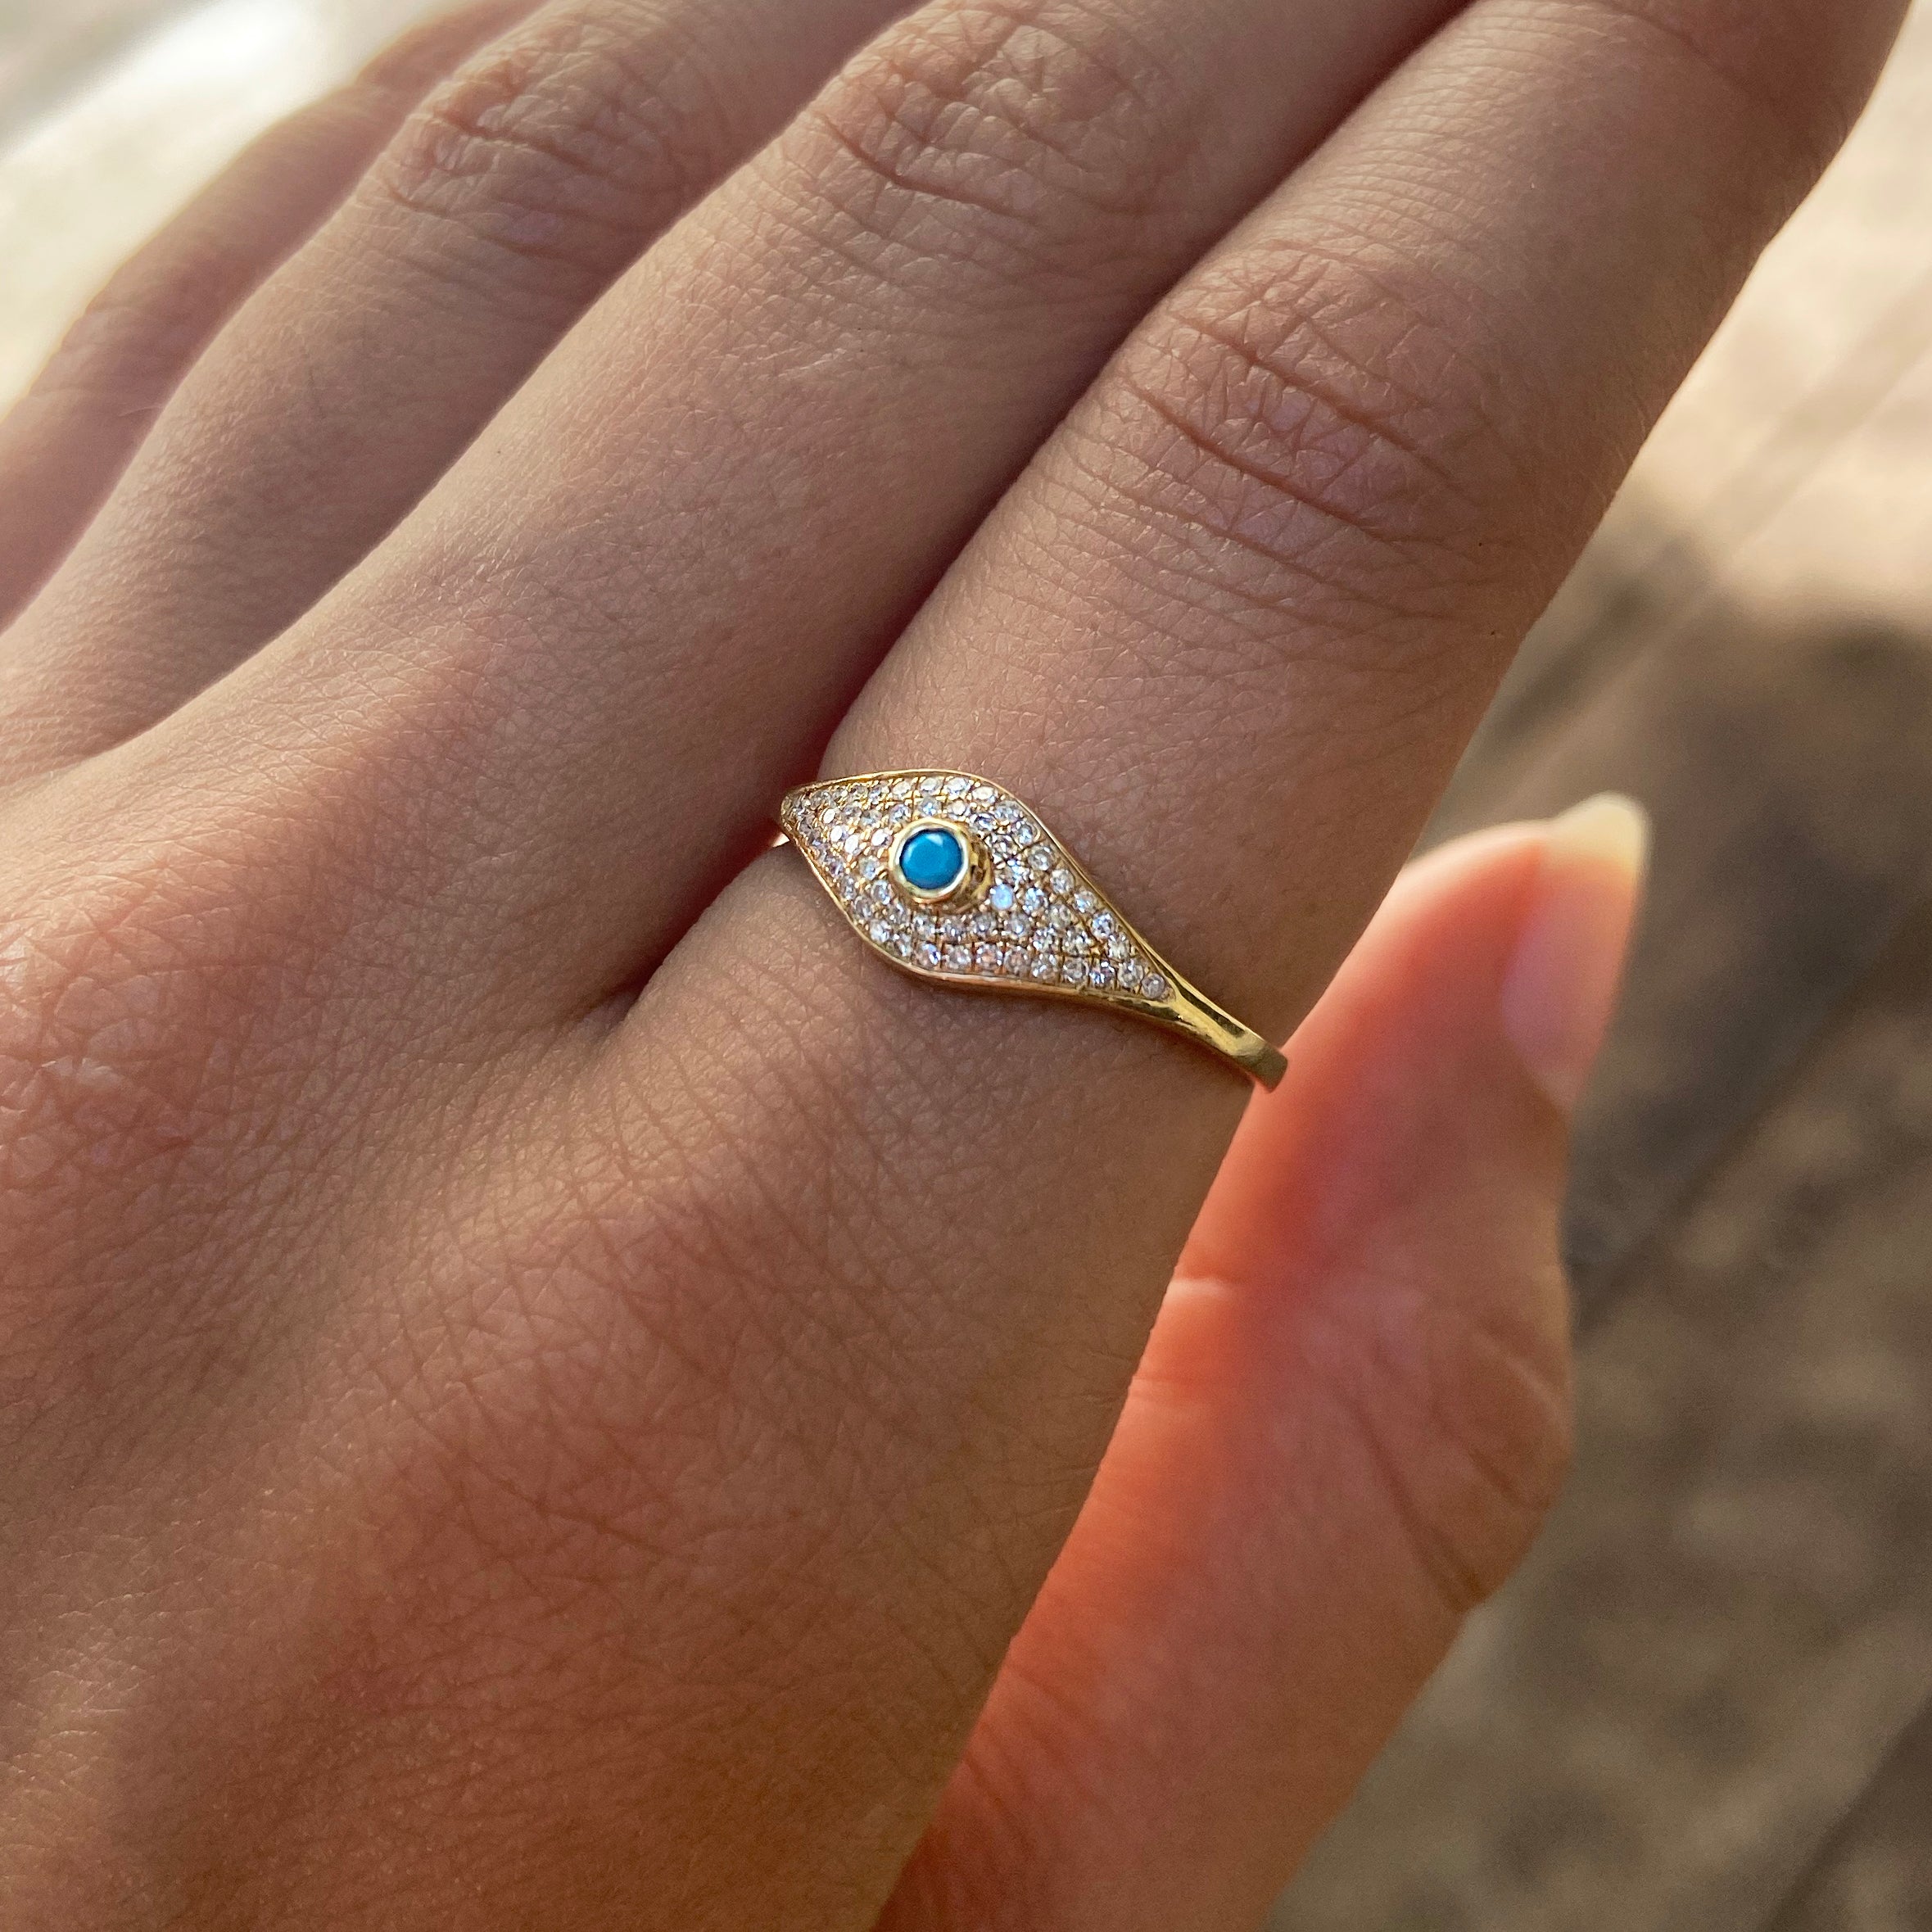 Gold Stainless Steel Ring Illuminati The All-seeing-eye pyramid/eye symbol  | eBay